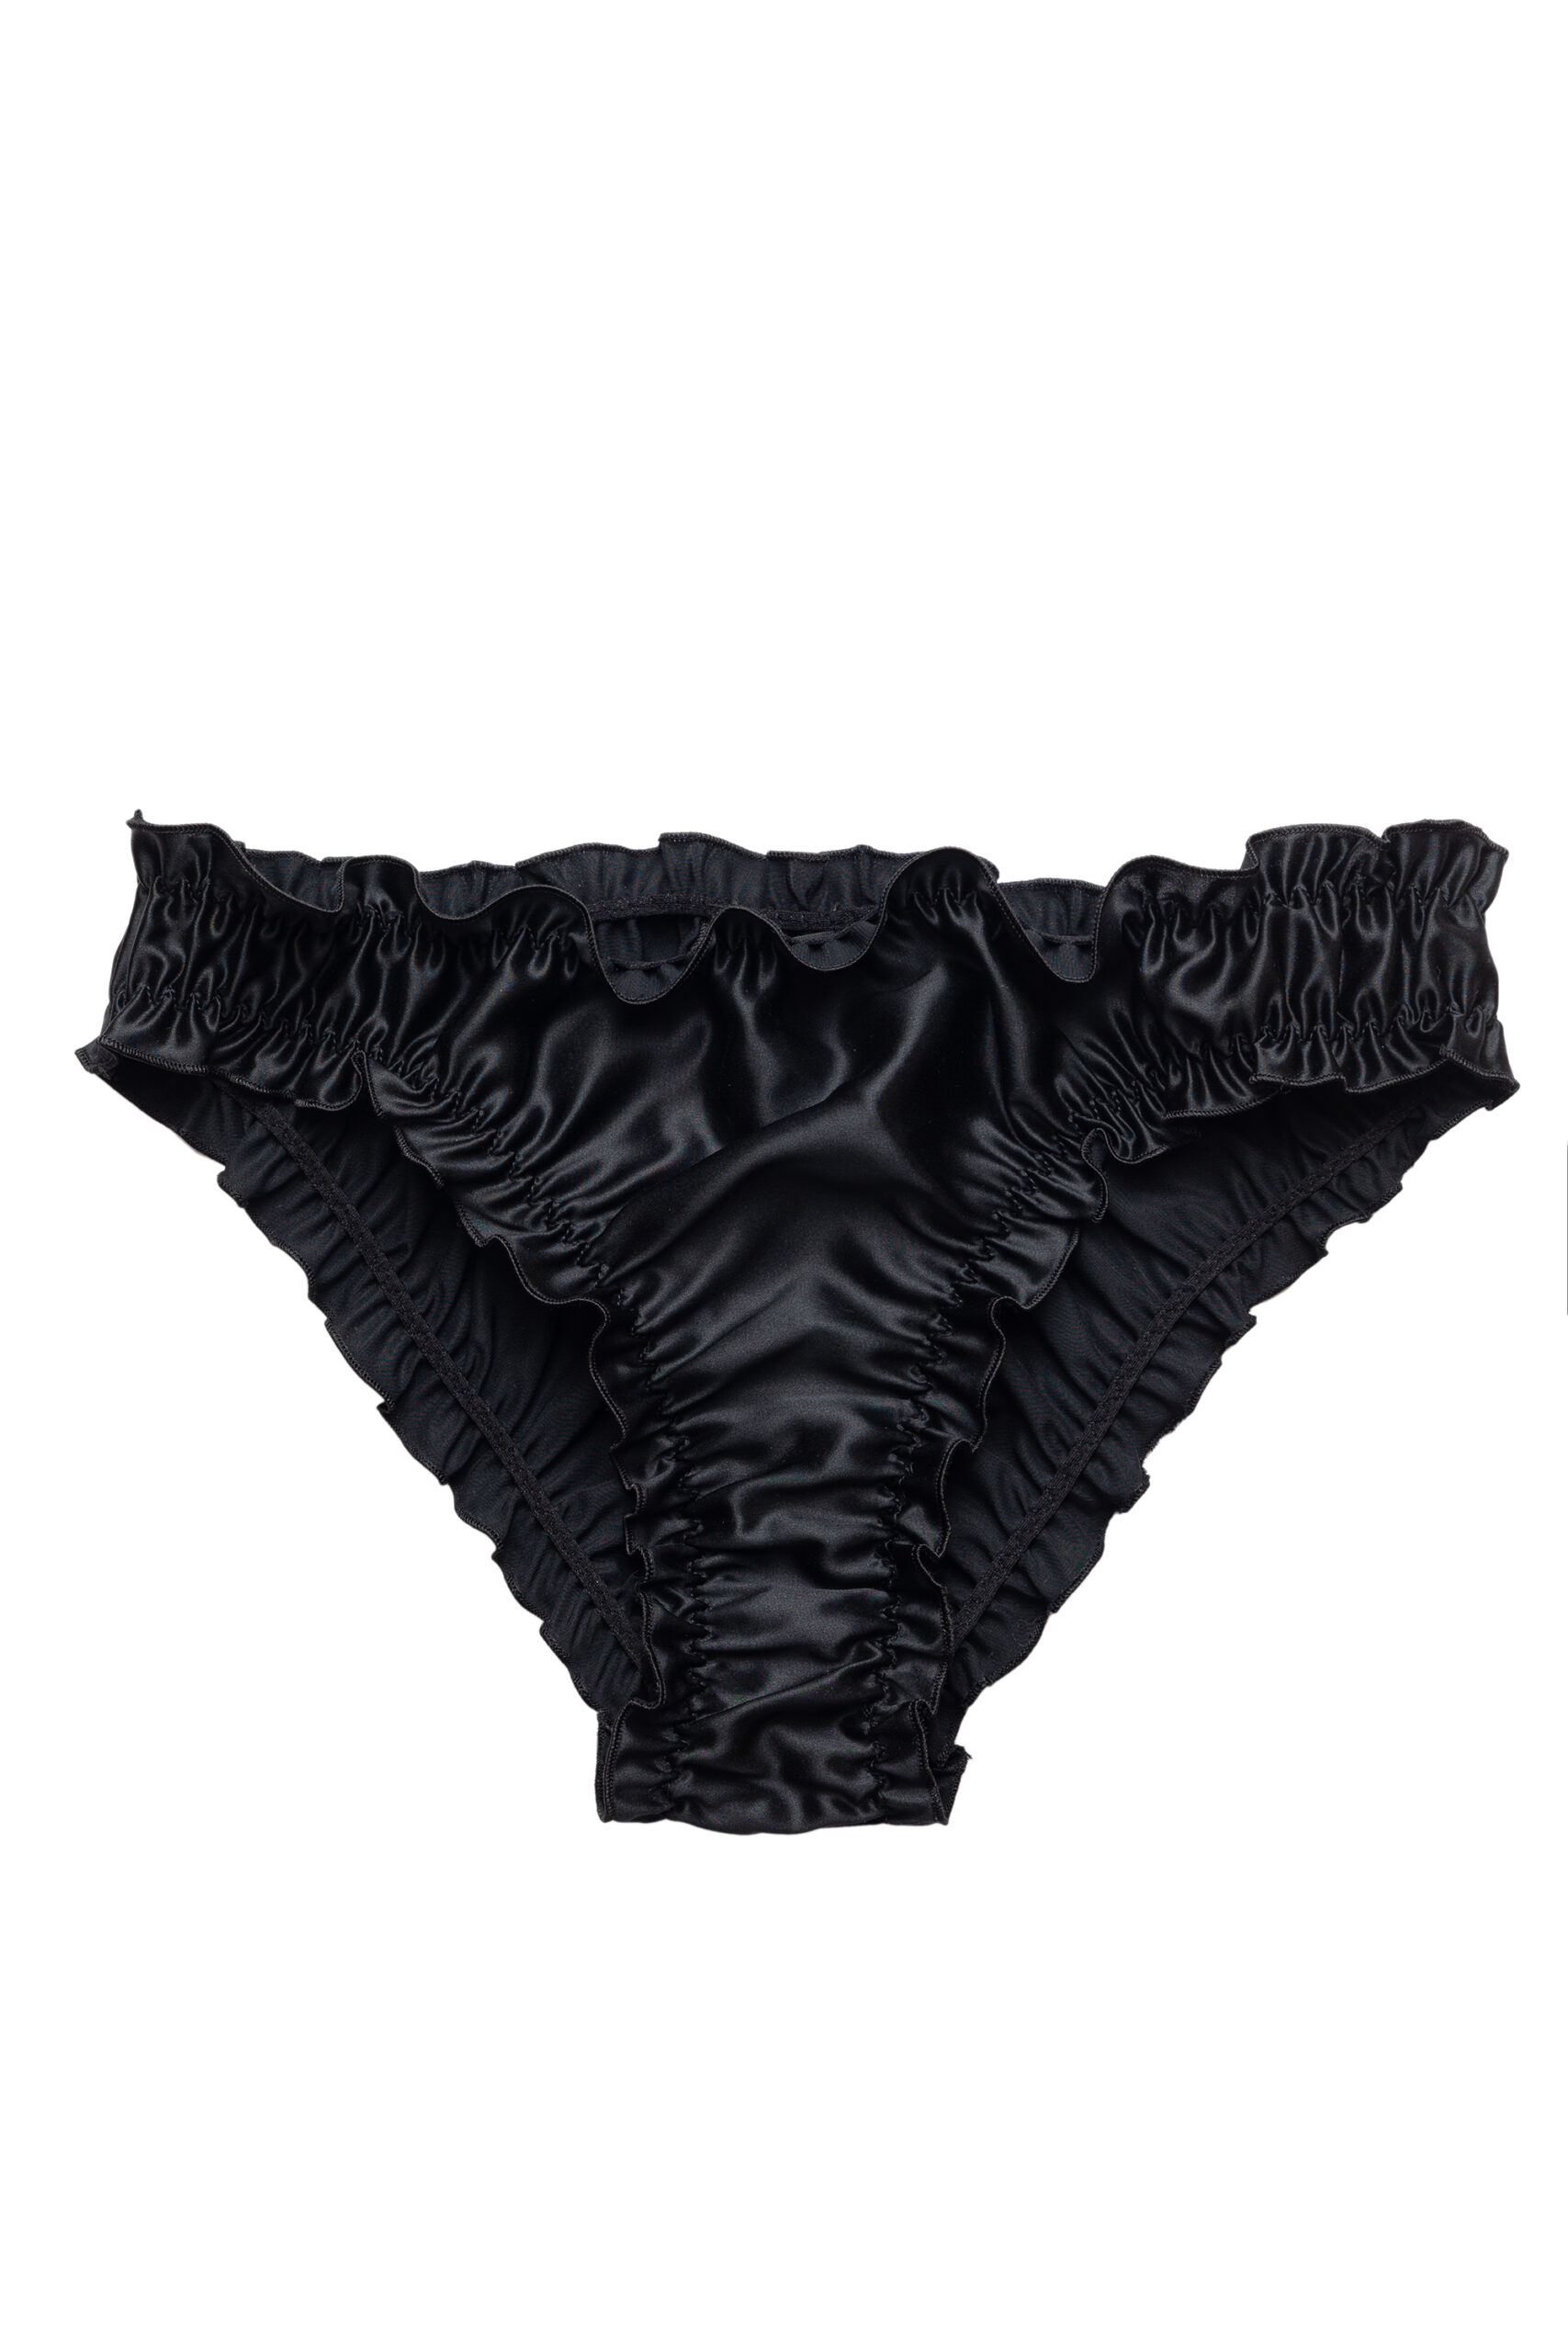 Silk Briefs Underwear Lingerie, Panties Rise Natural Silk